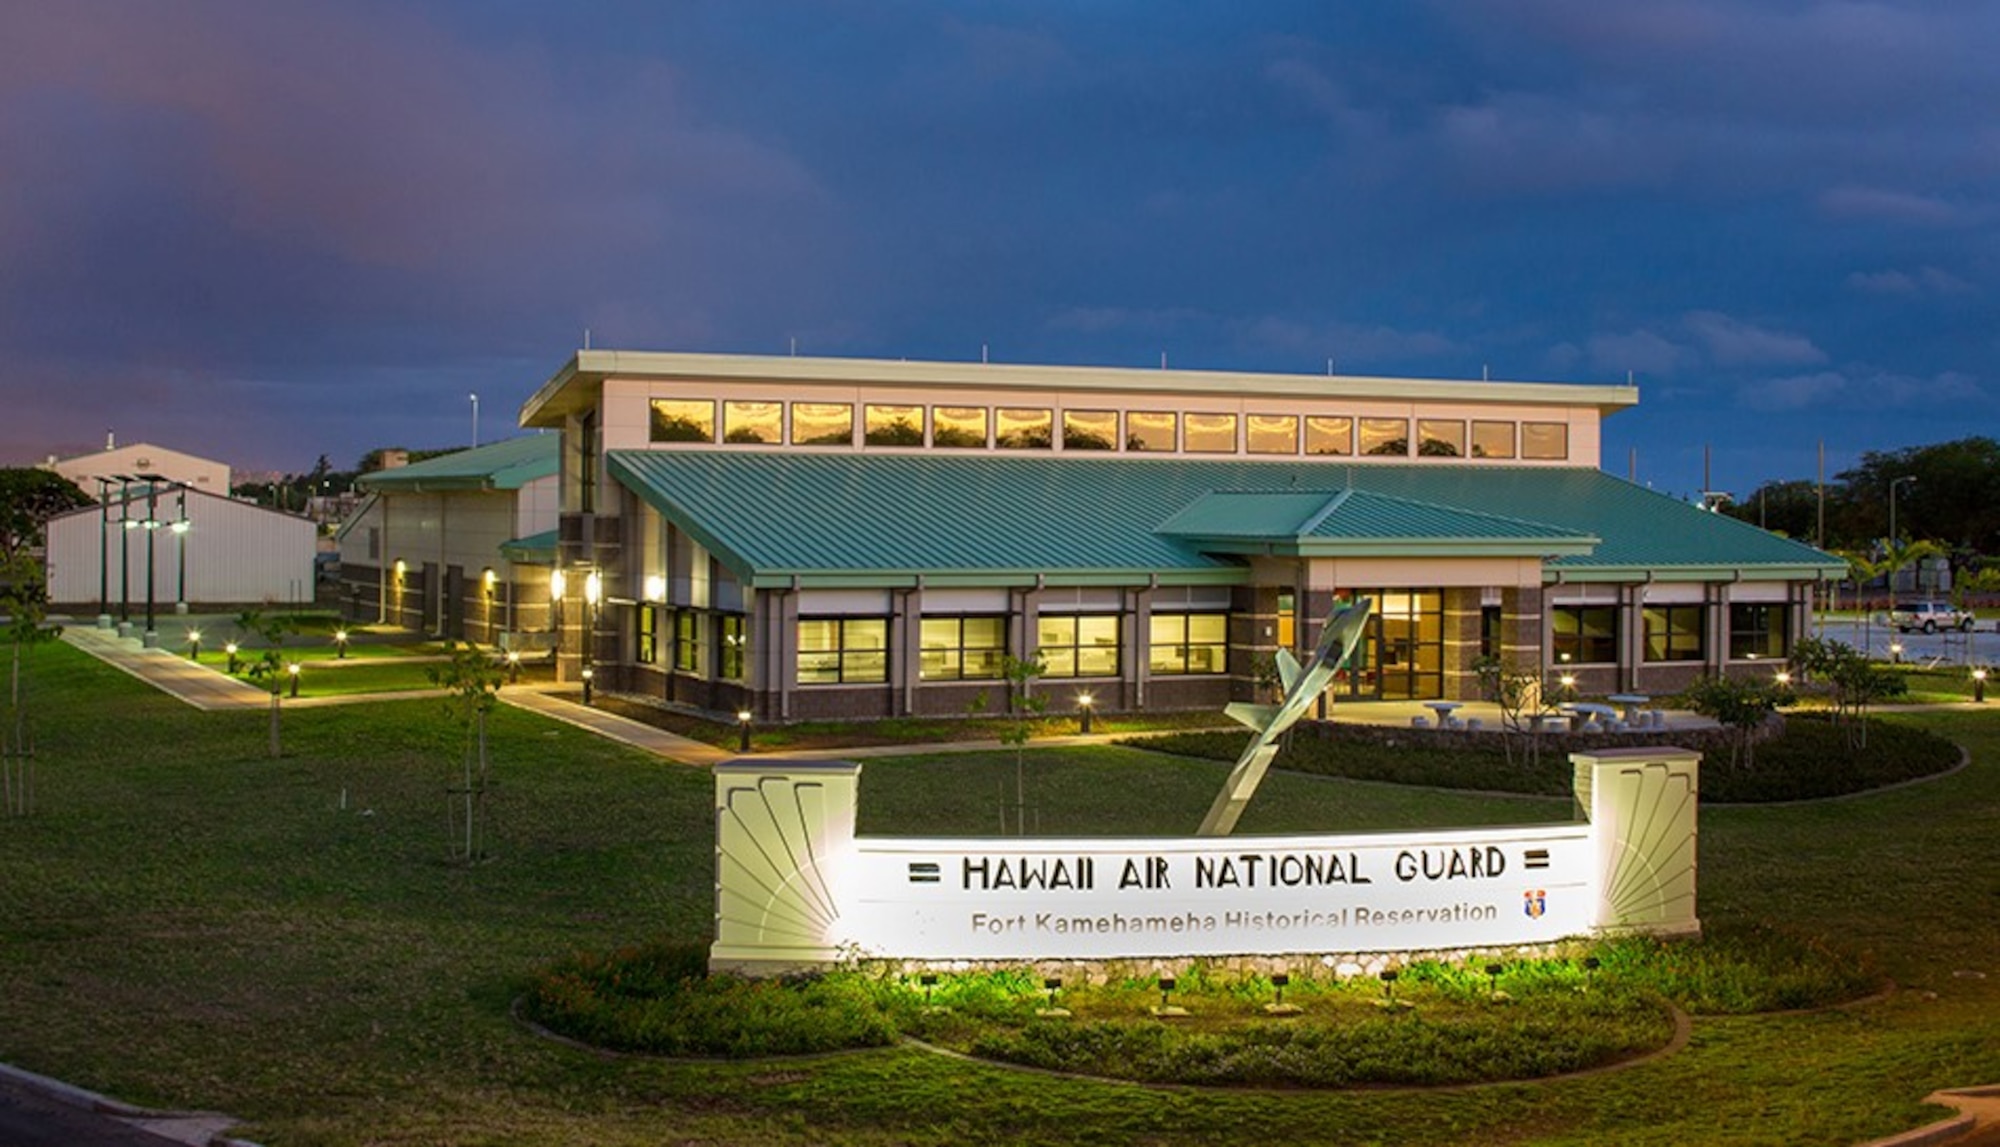 F-22 Flight Simulator building at Joint Base Pearl Harbor Hickam, Hawaii